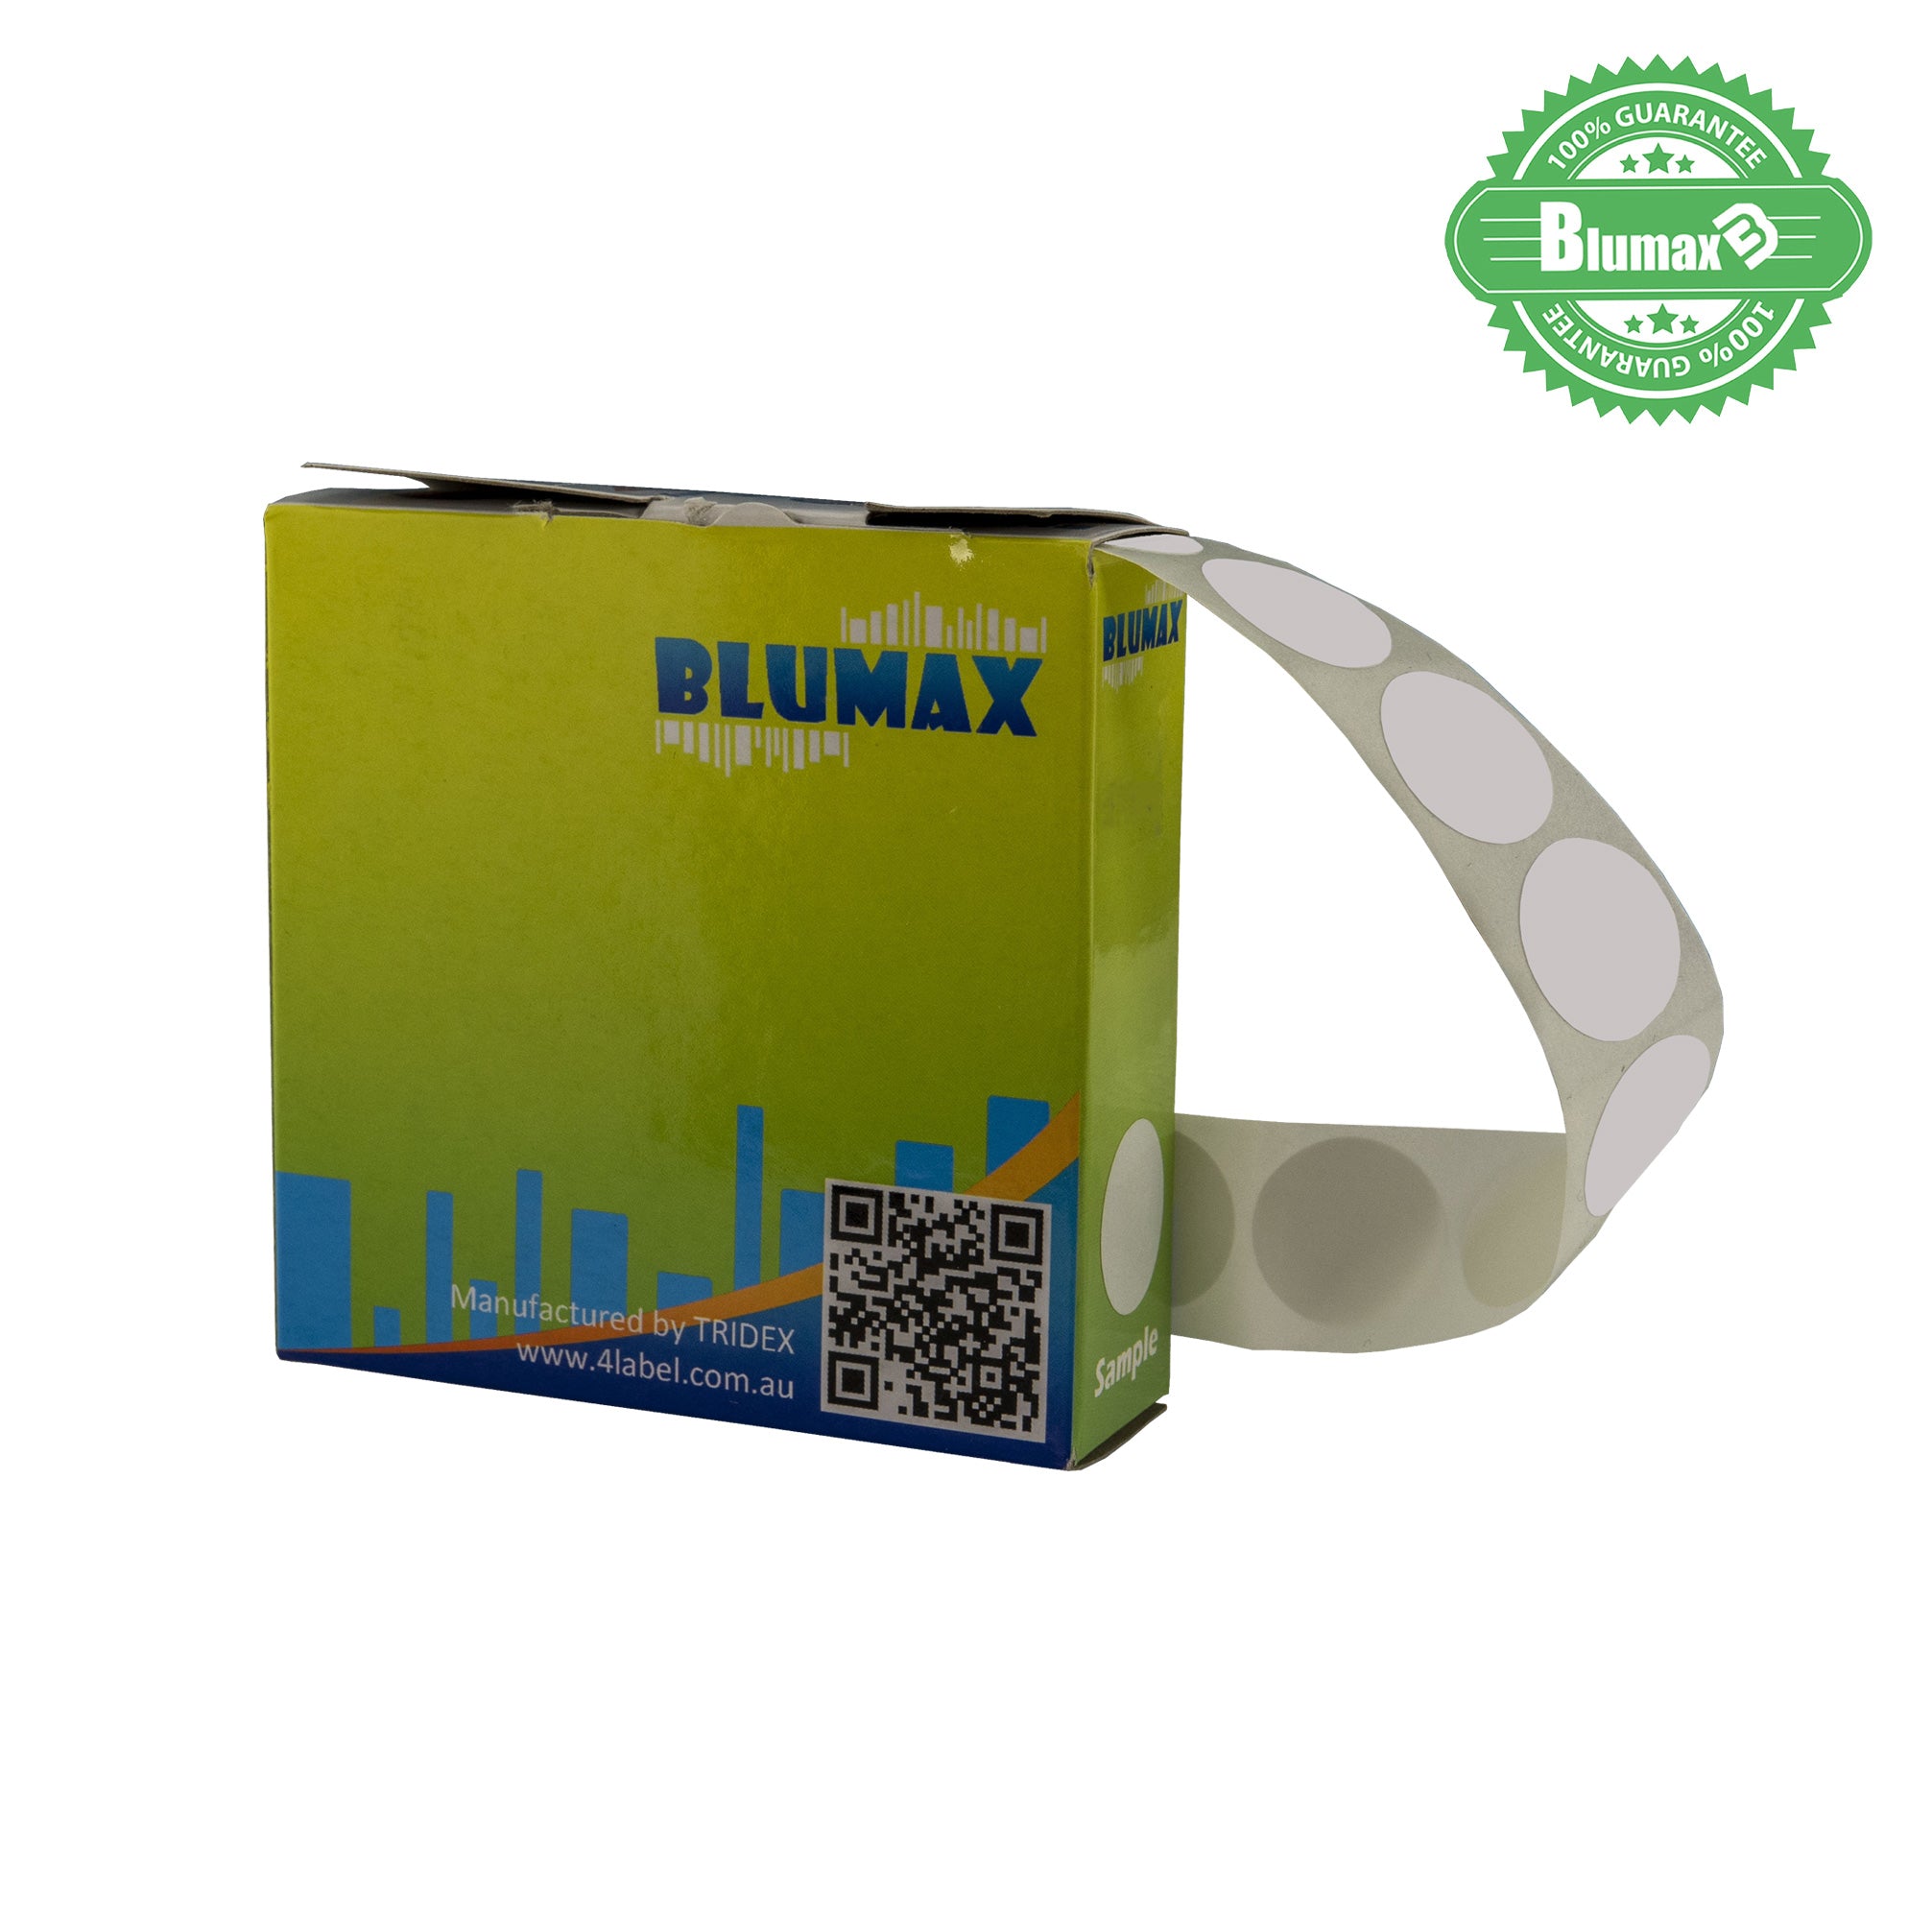 Blumax Self Dispenser Round (14MM) White Label Dots